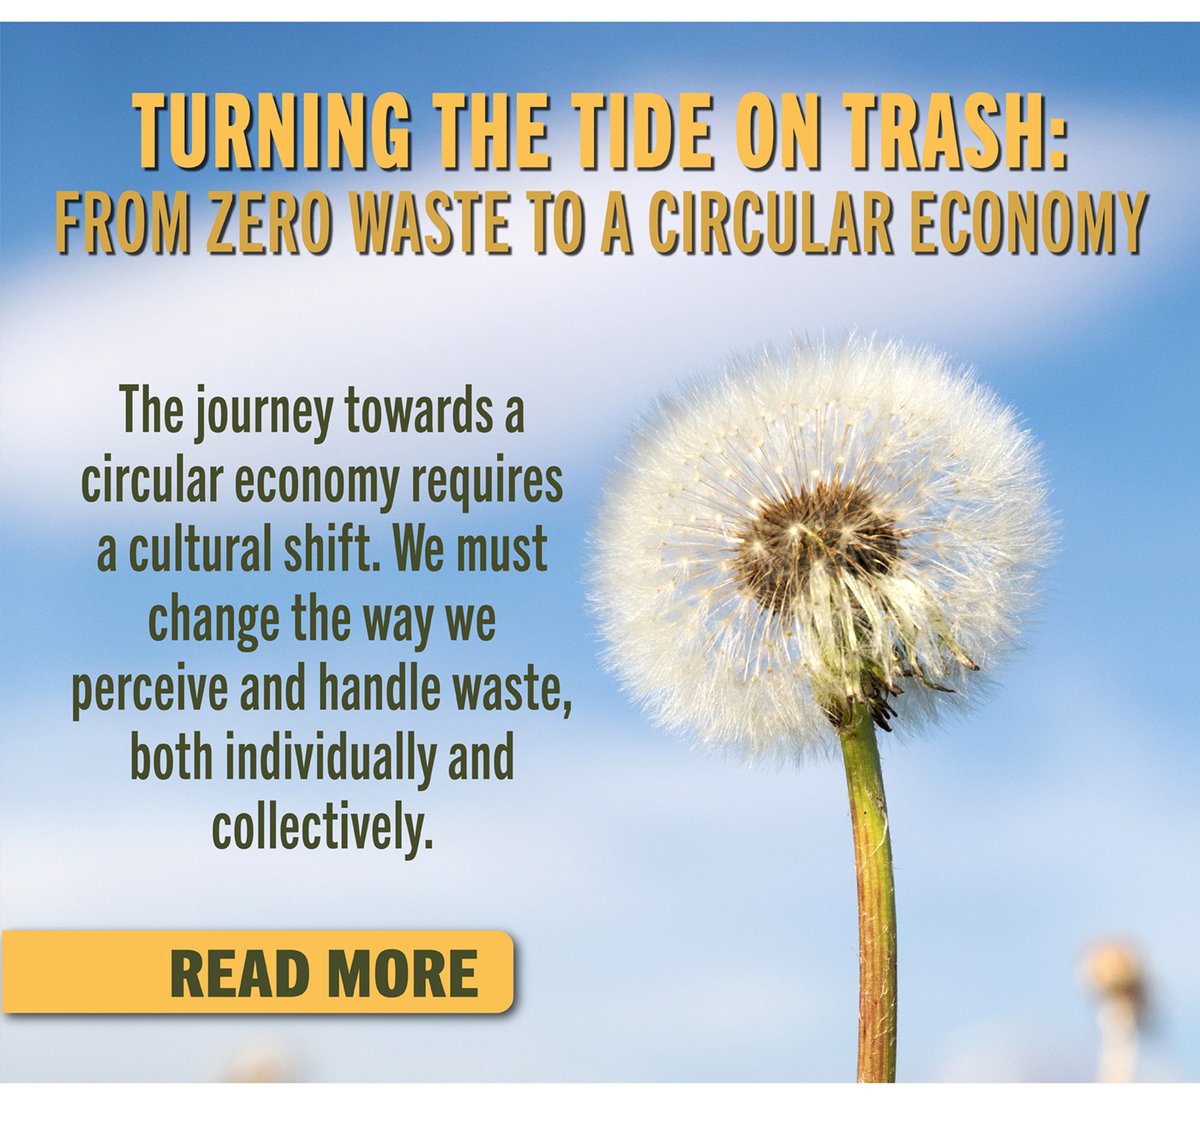 From Zero Waste to Circular Economy